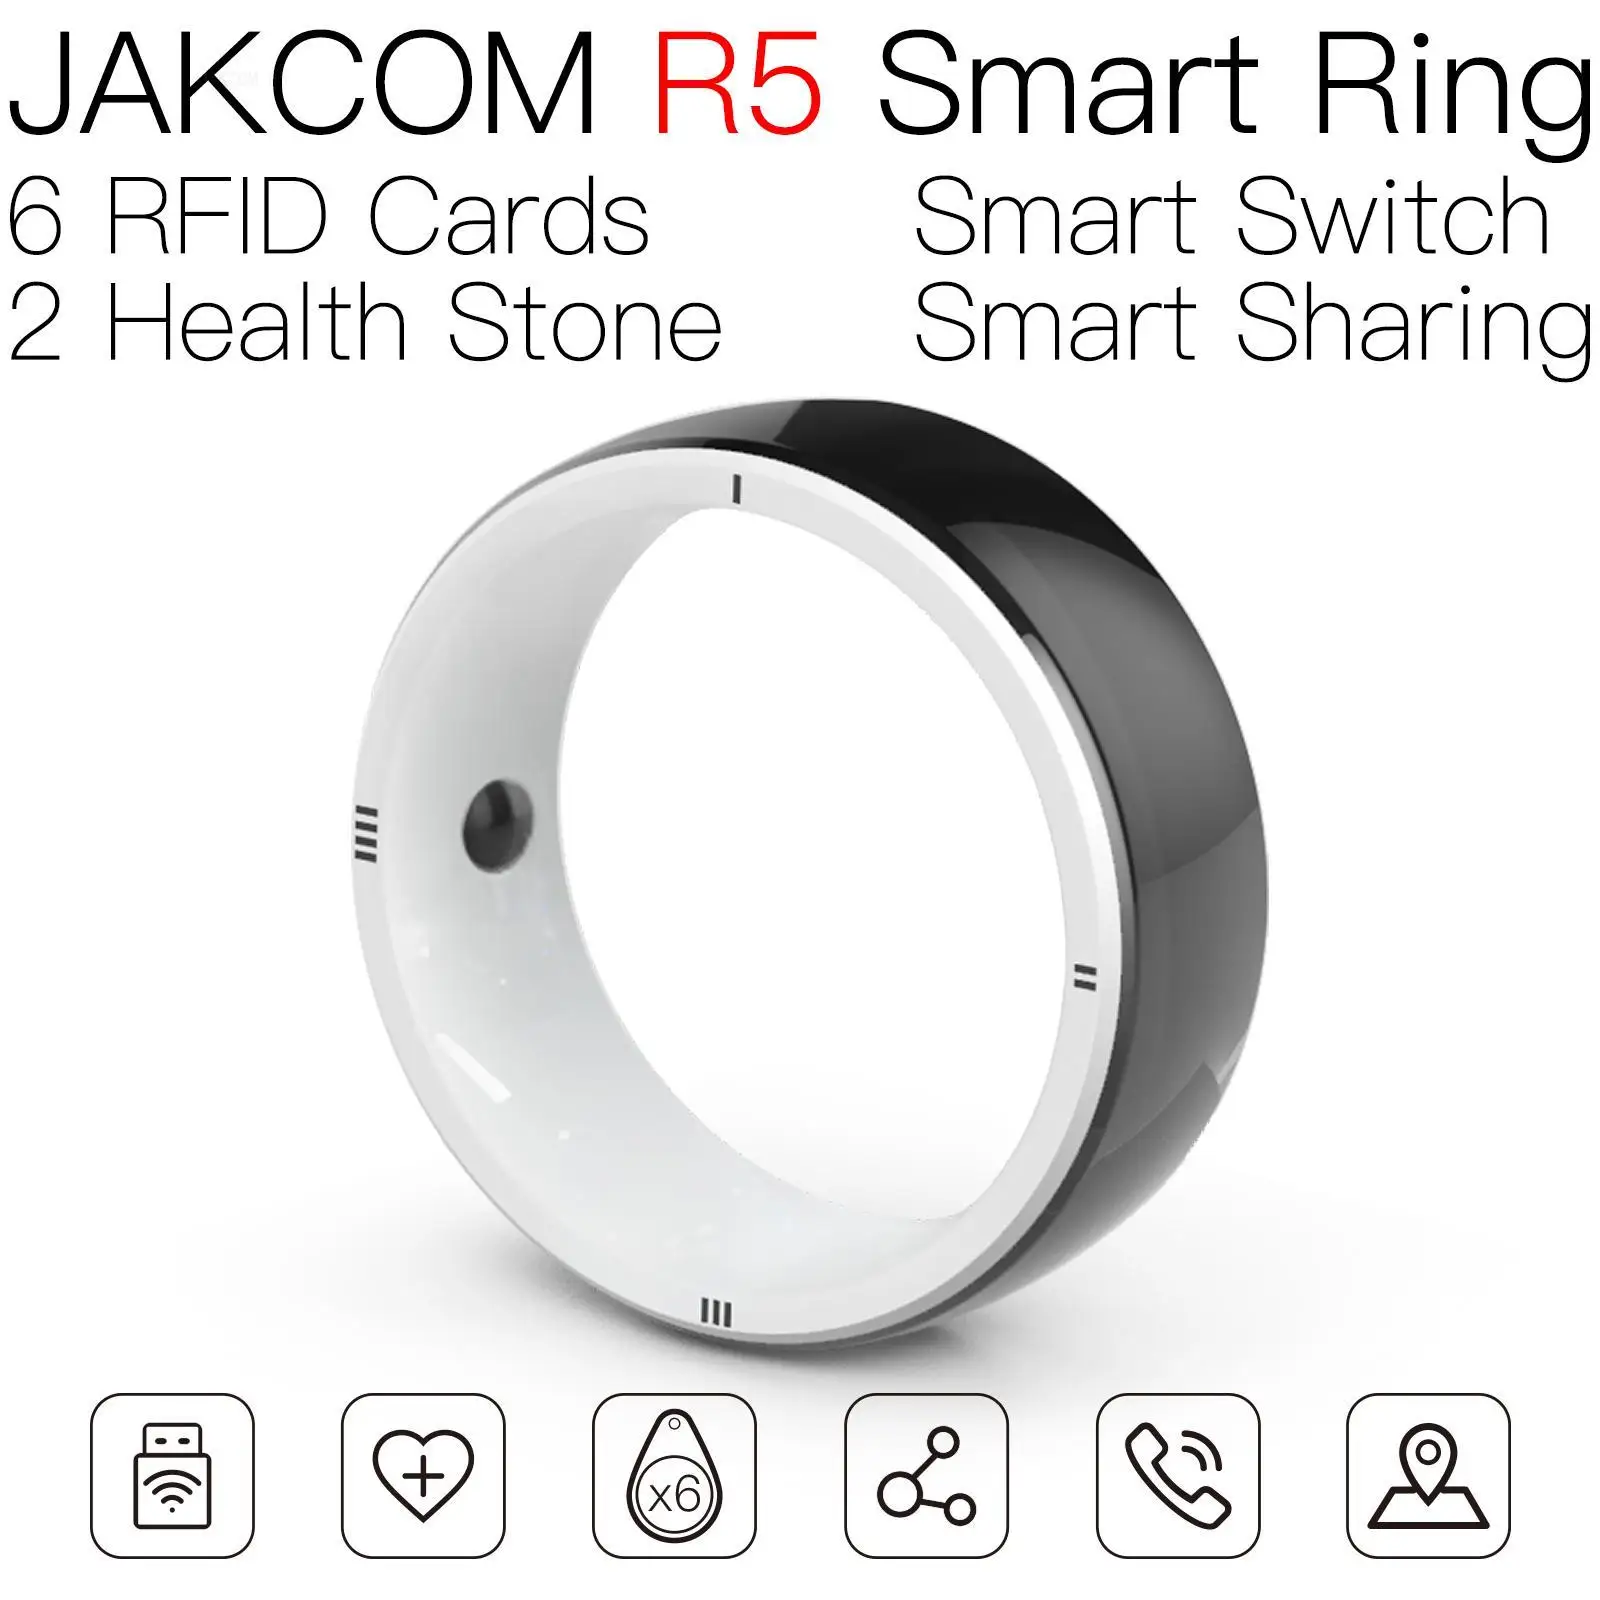 

JAKCOM R5 Smart Ring Super value as uhf splitter nfc uid changeable card rfid coil 125khz tag t5577 hotels resorts